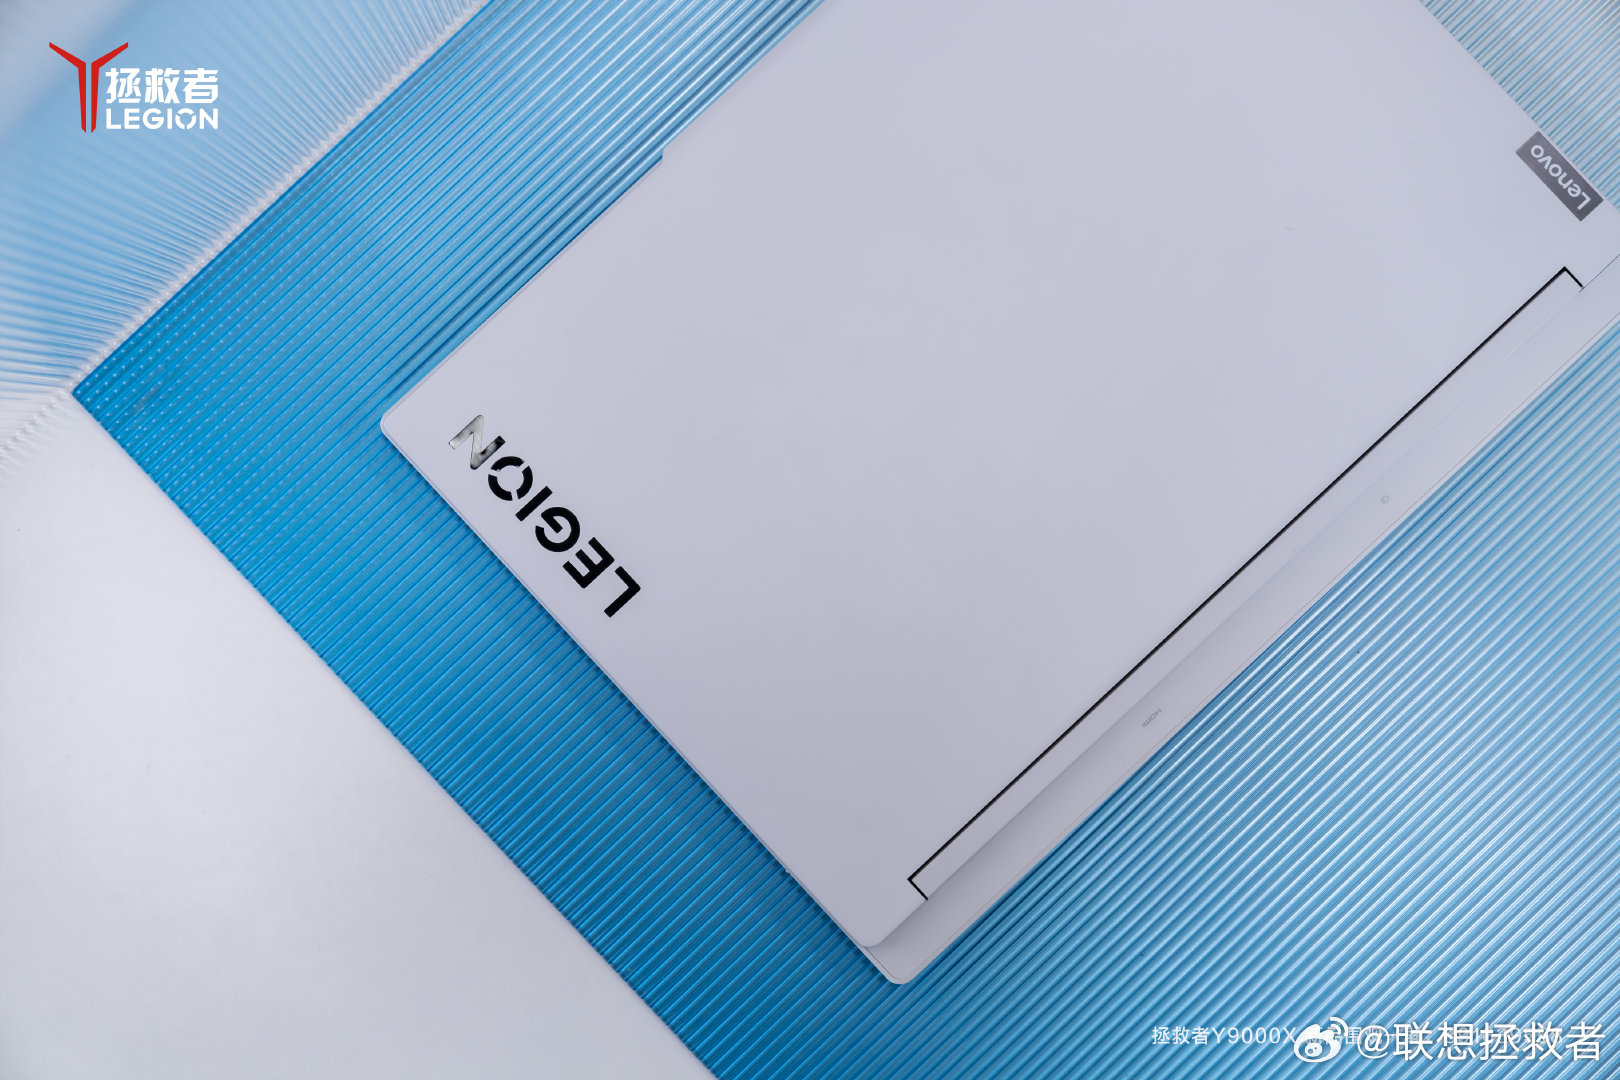 игровой ноутбук Lenovo Legion Y9000X в цвете Ice White